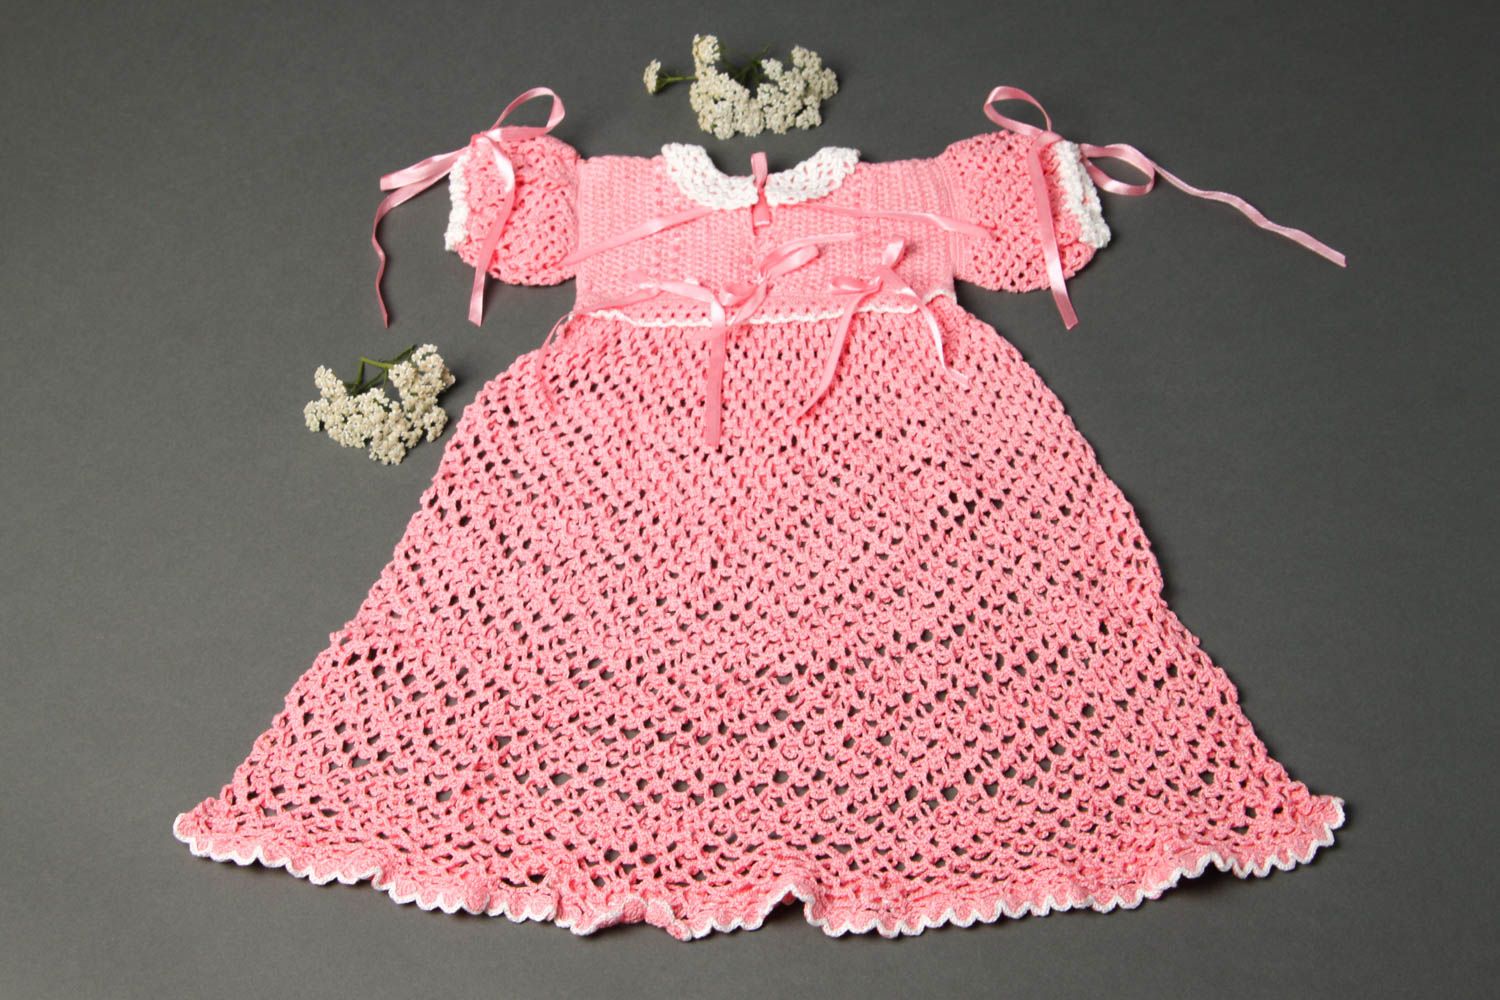 Handmade dress for children unusual clothes designer dress for children photo 1